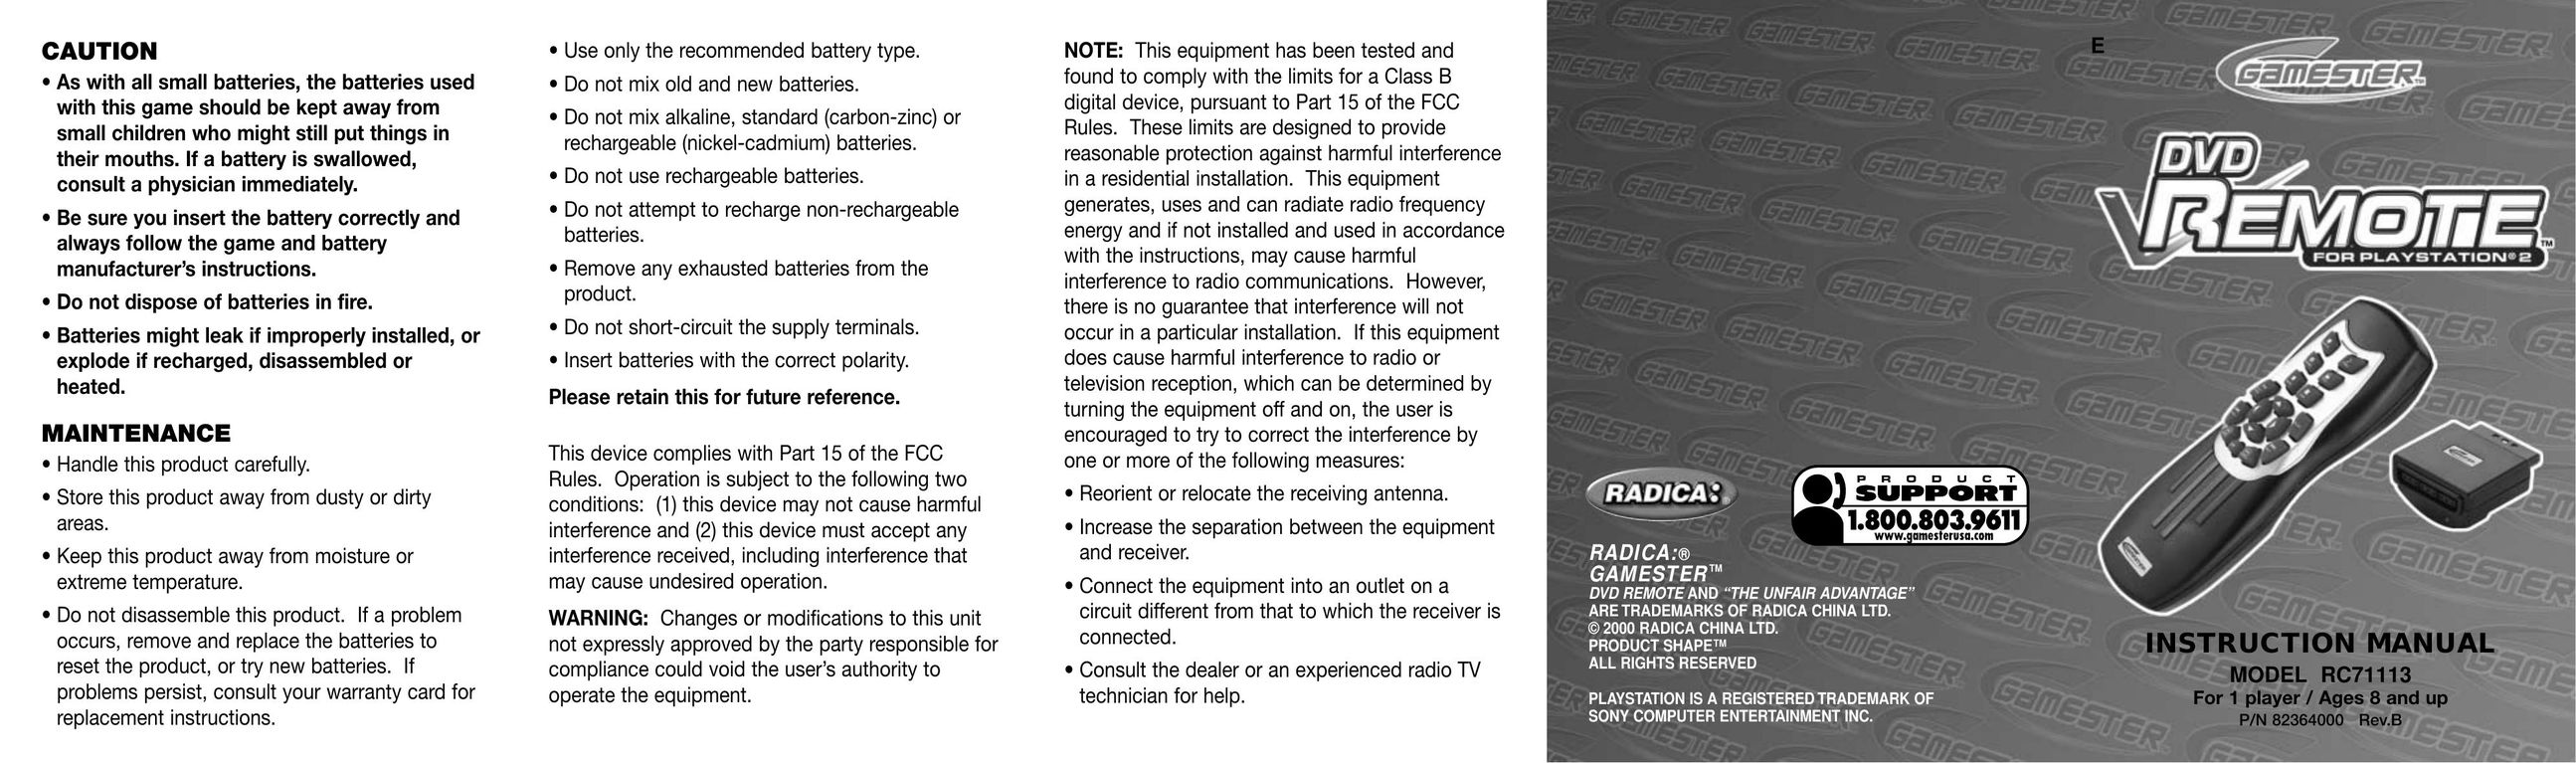 Radica Games RC71113 Universal Remote User Manual